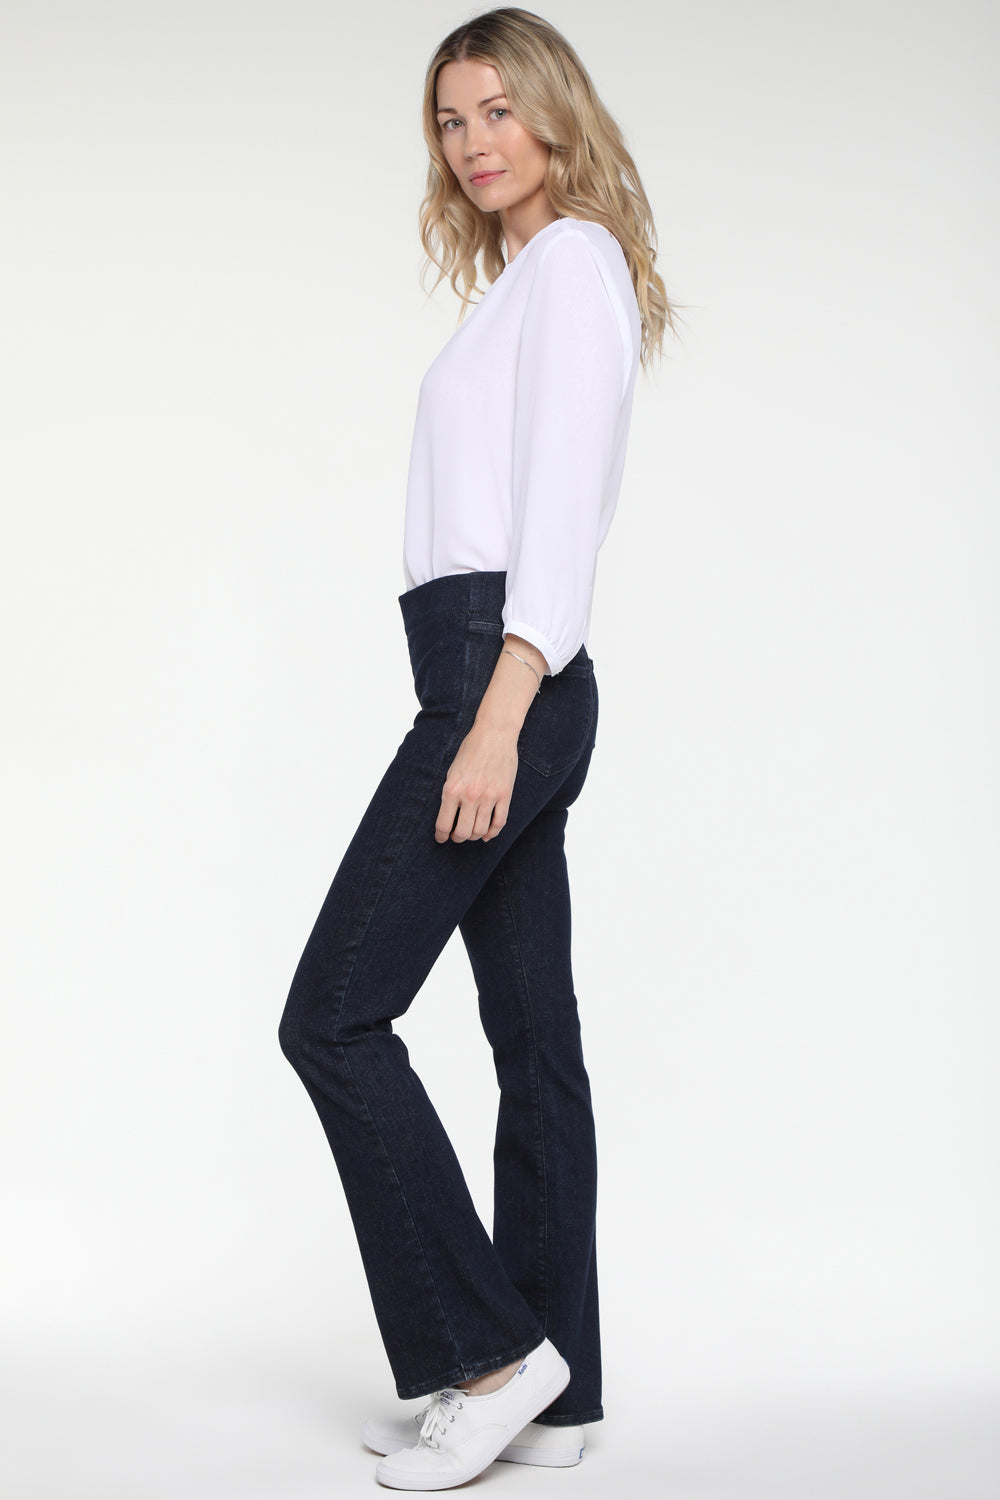 Blue Denim In | - Langley NYDJ Pull-On In Jeans SpanSpring™ Petite Slim Bootcut